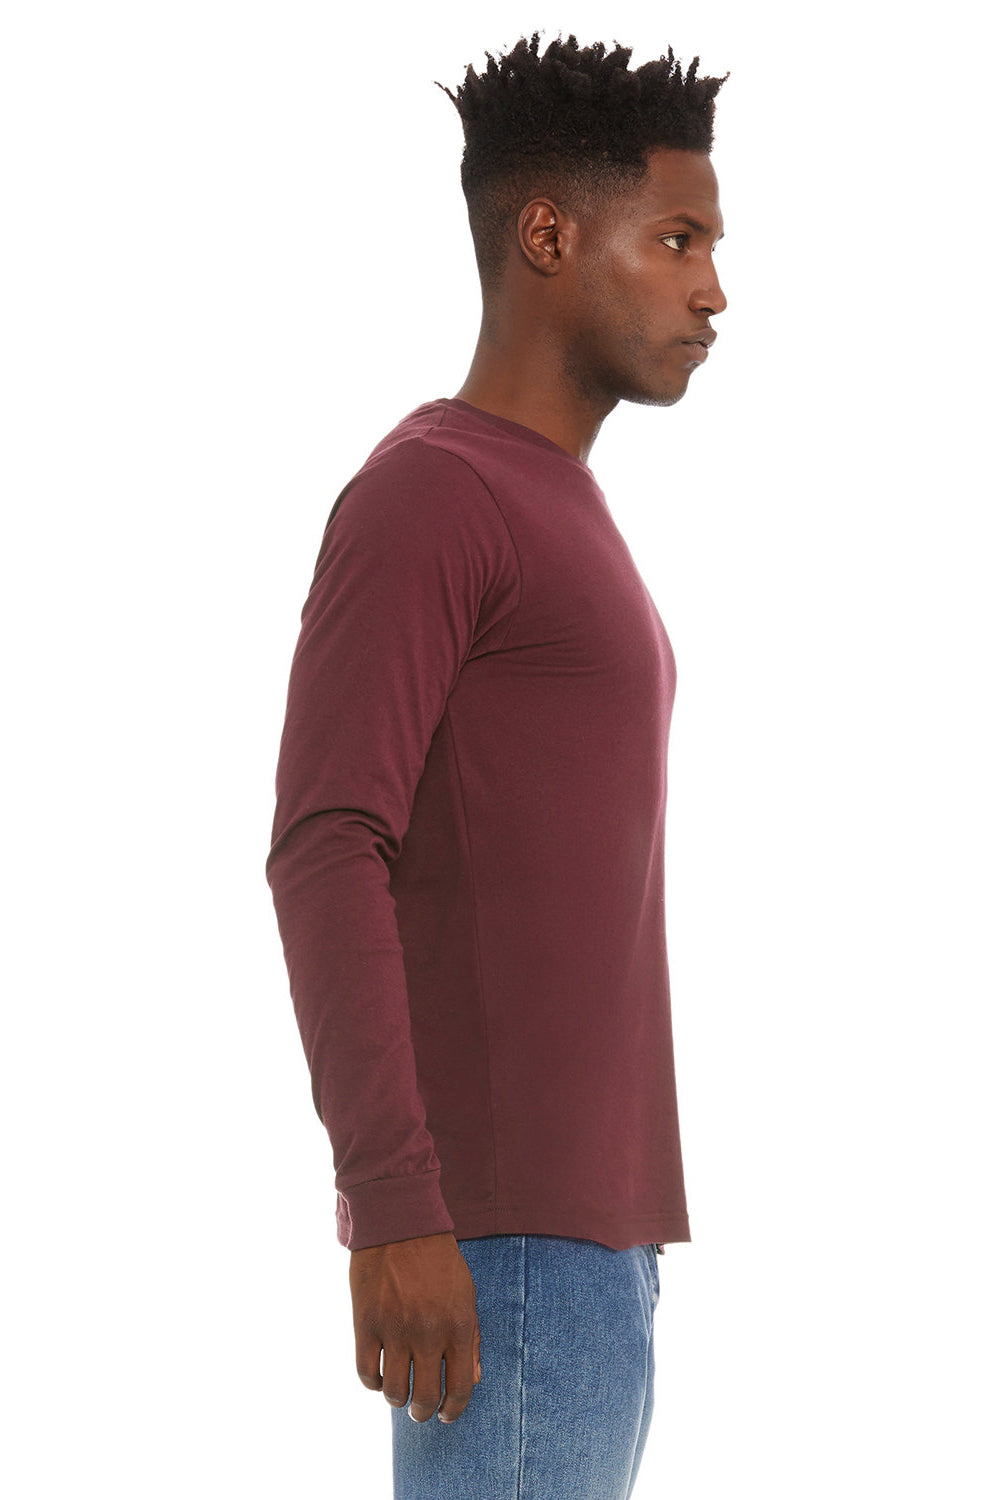 Bella + Canvas BC3501/3501 Mens Jersey Long Sleeve Crewneck T-Shirt Maroon Model Side